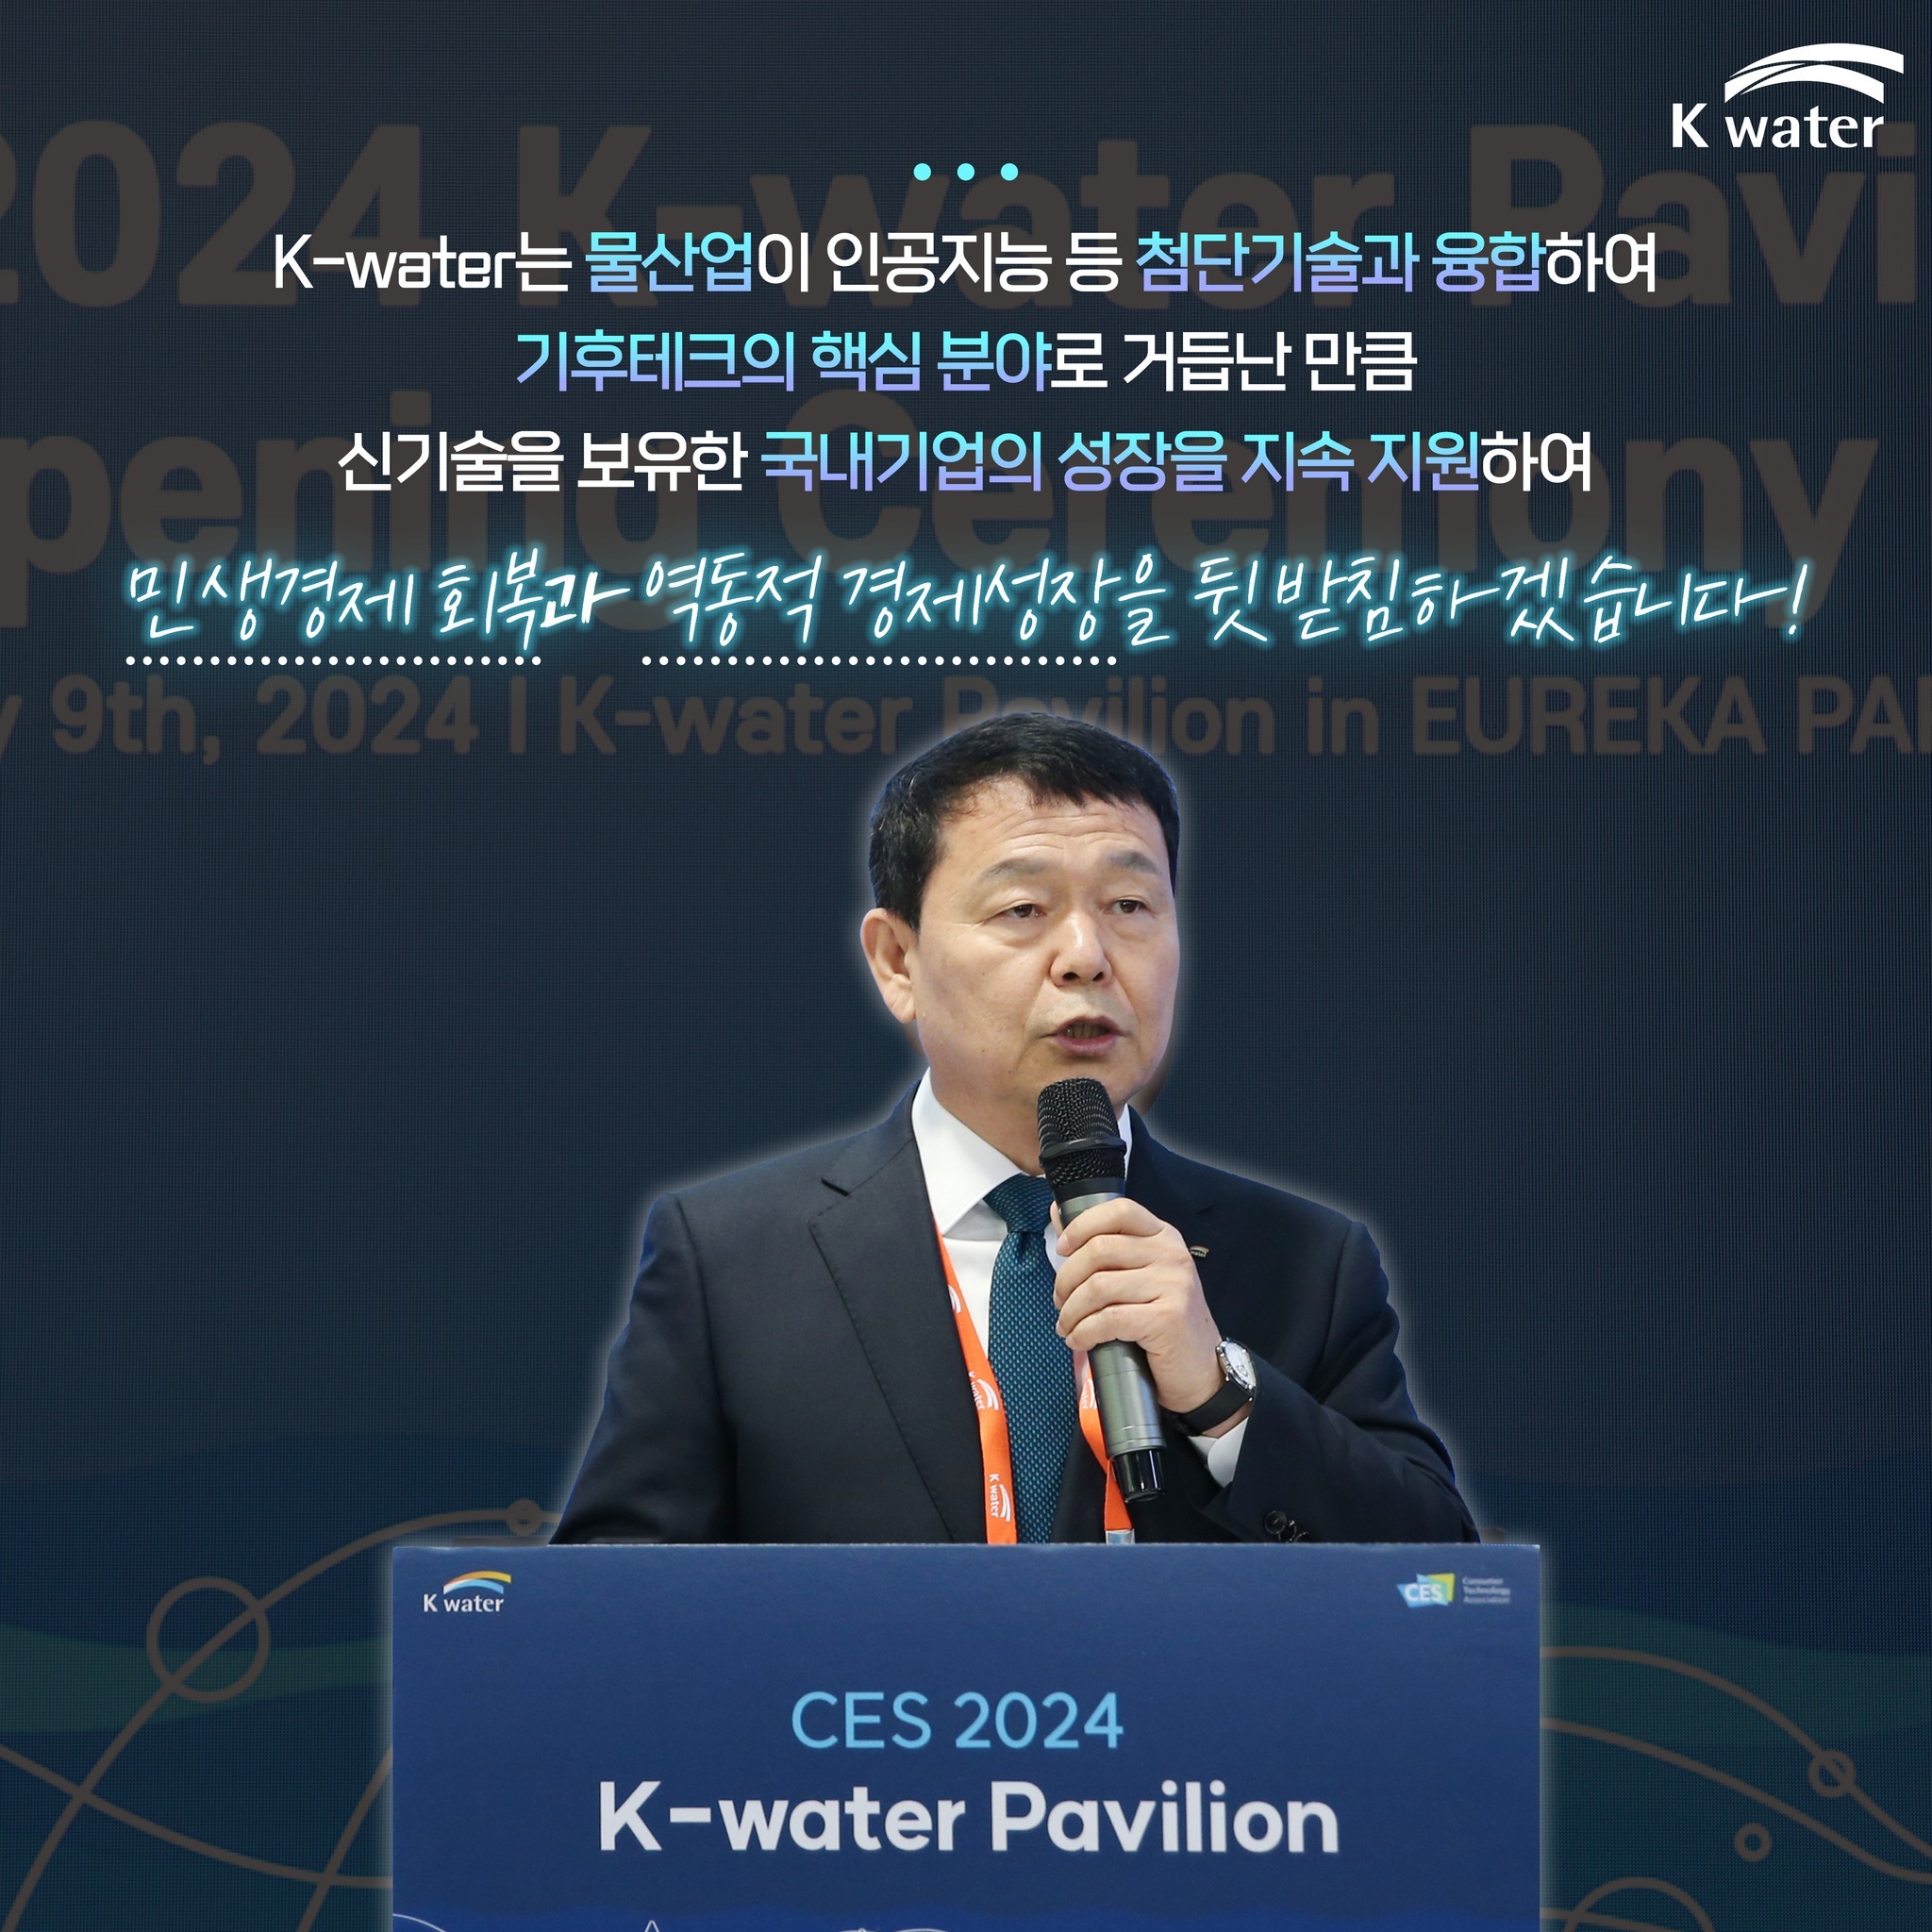 K-water는 물산업이 인공지능 등 첨단기술과 융합하여 기후테크의 핵심 분야로 거듭난 만큼 신기술을 보유한 국내기업의 성장을 지속 지원하여 민생경제 회복과 역동적 경제성장을 뒷받침하겠습니다!